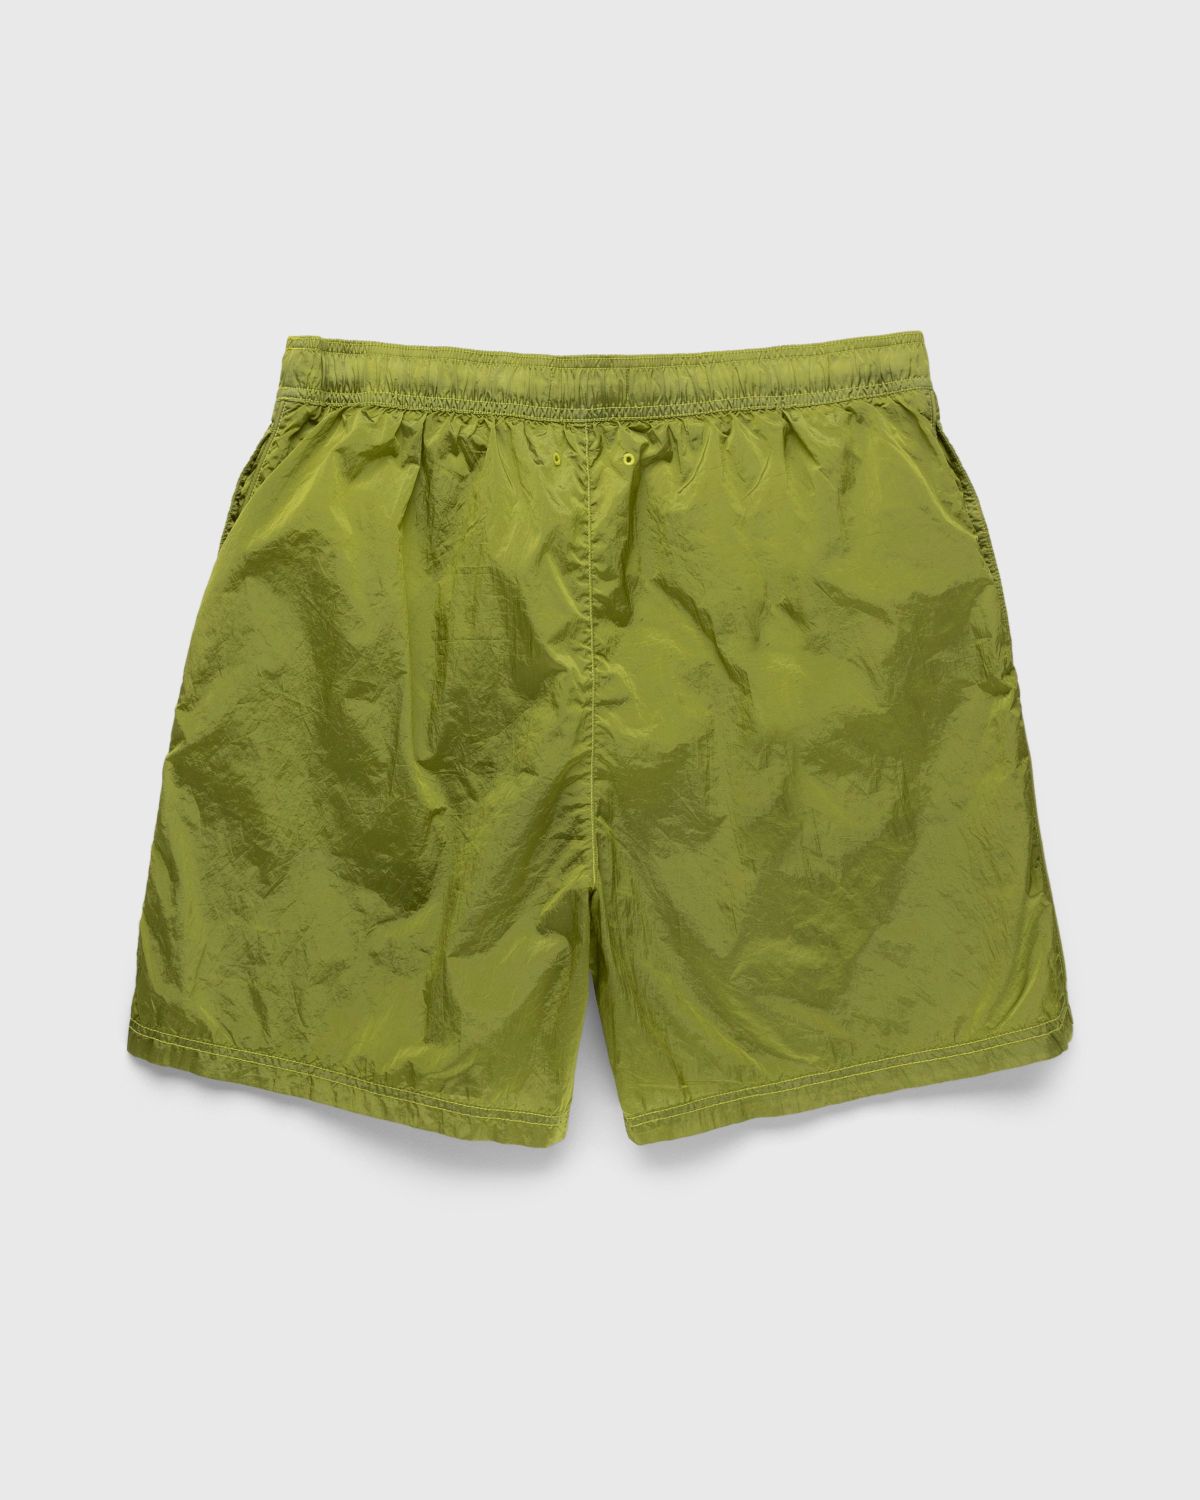 Stone Island – B0243 Nylon Metal Swim Shorts Lemon - Shorts - Yellow - Image 2